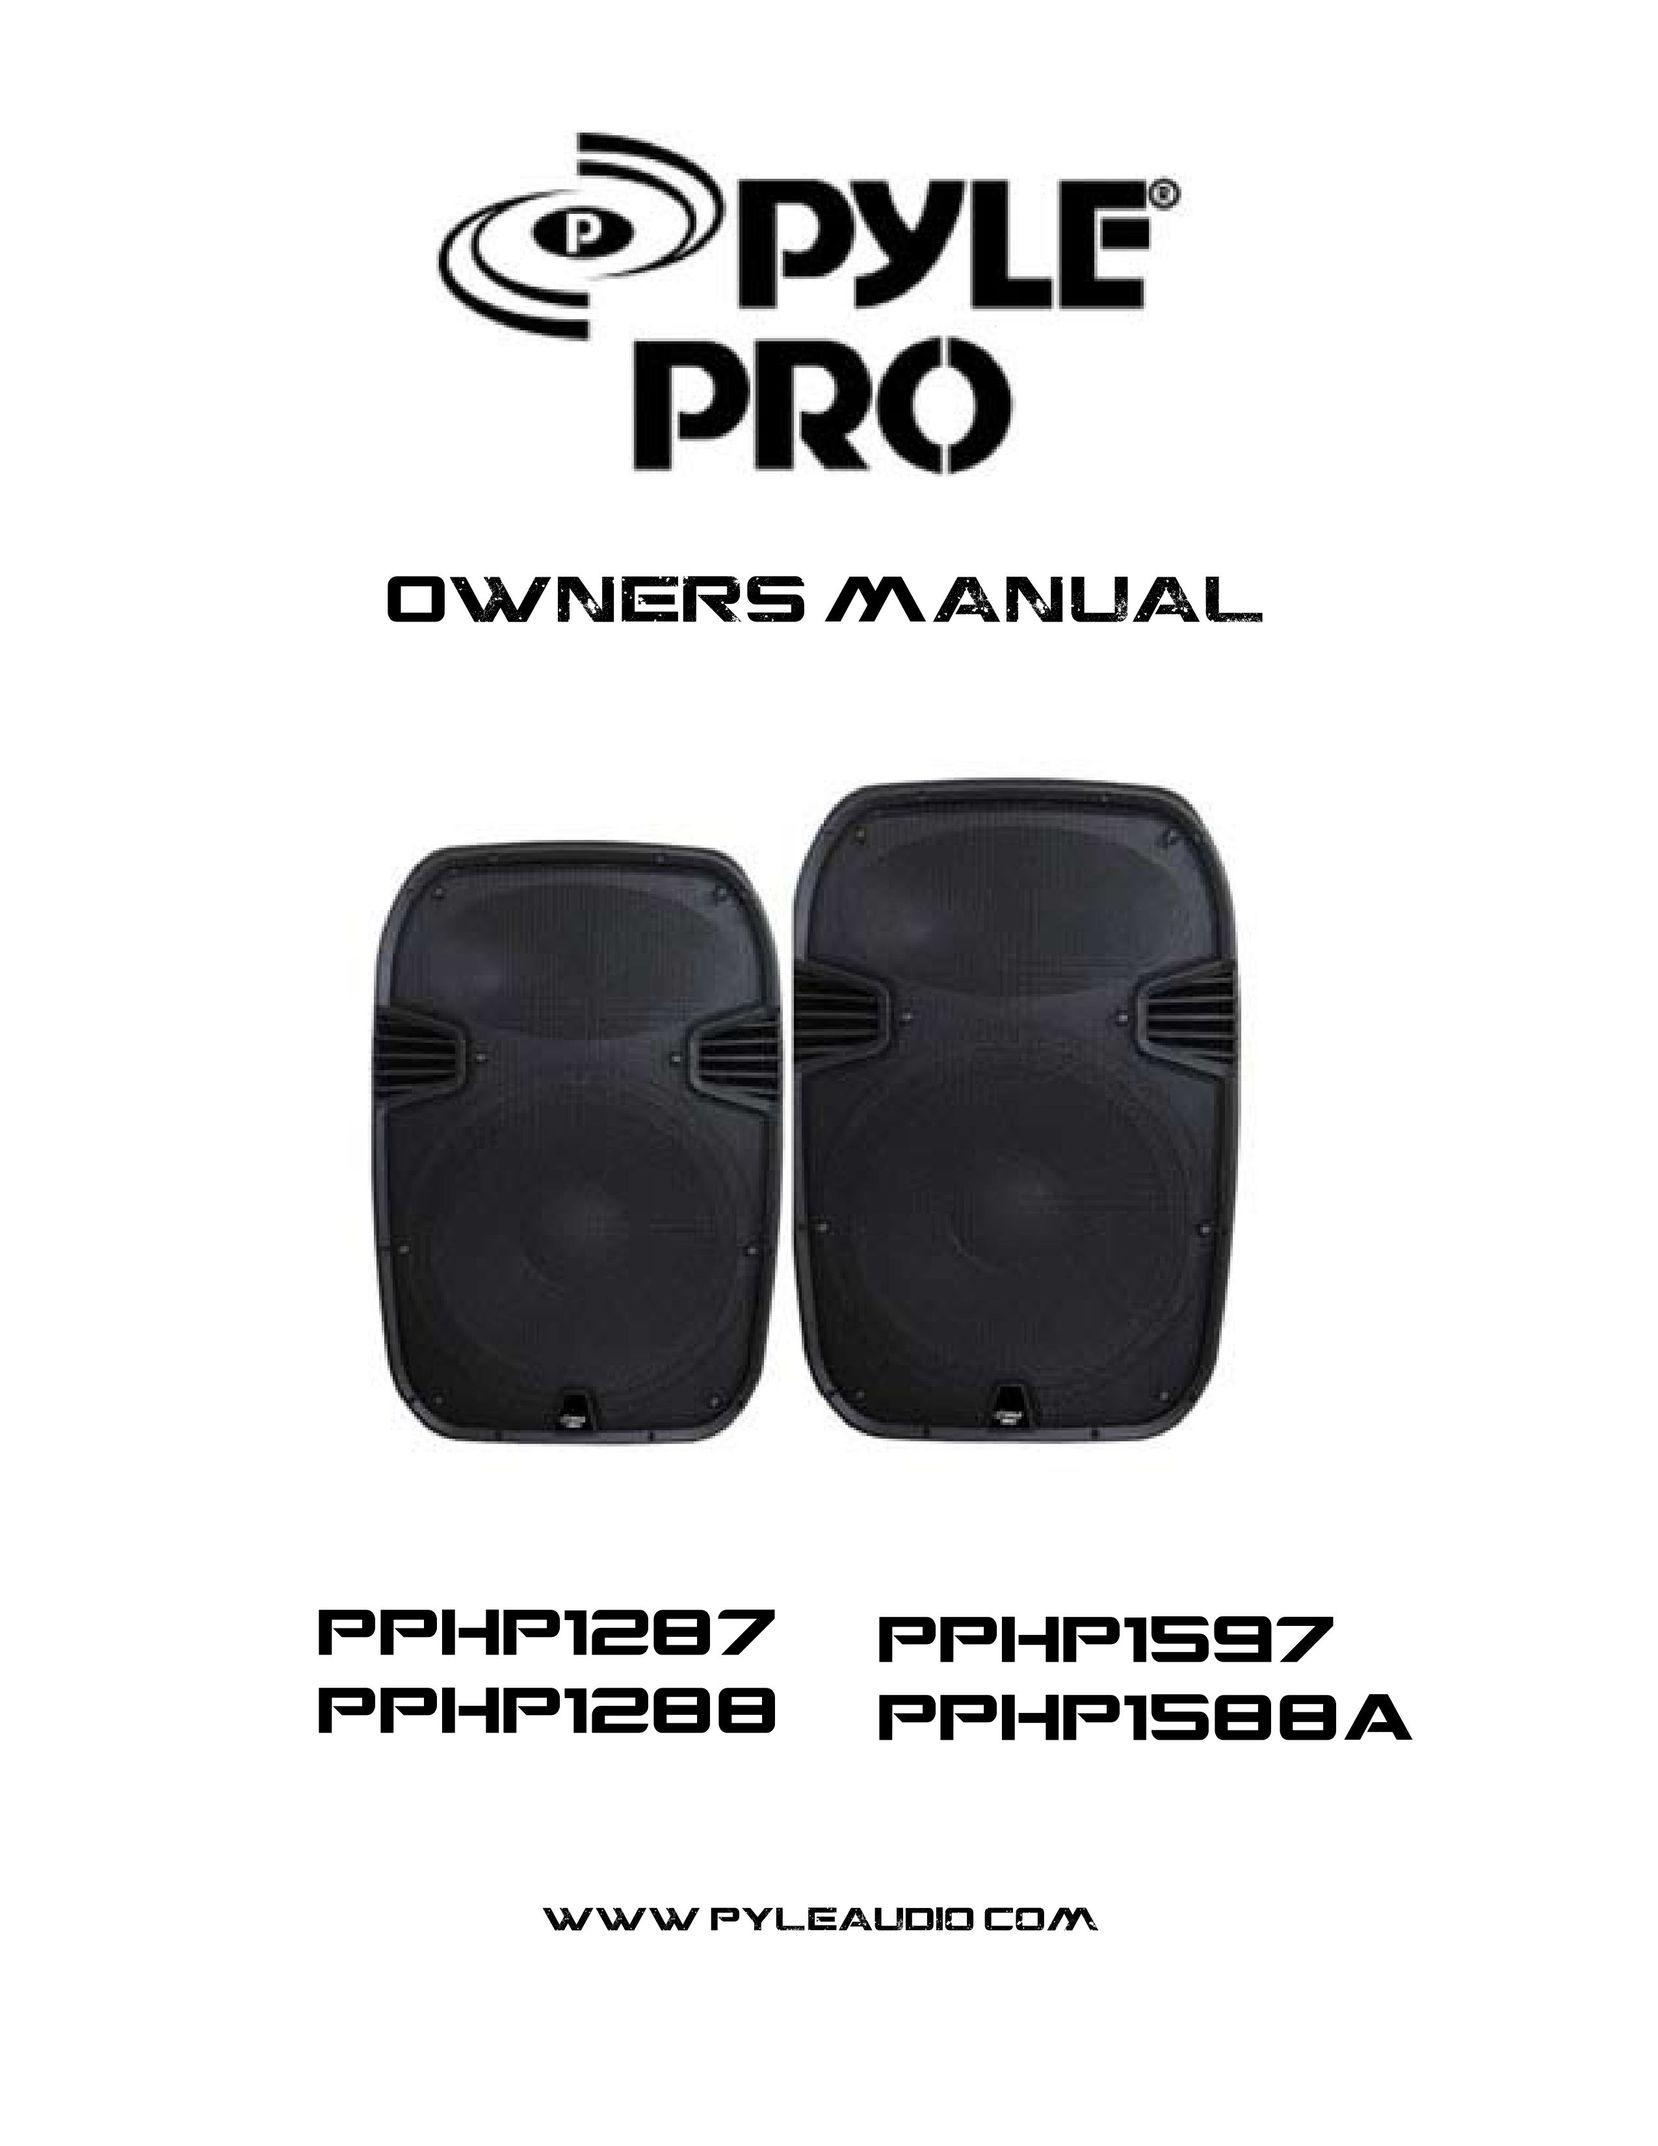 PYLE Audio PPHP1288 Portable Speaker User Manual